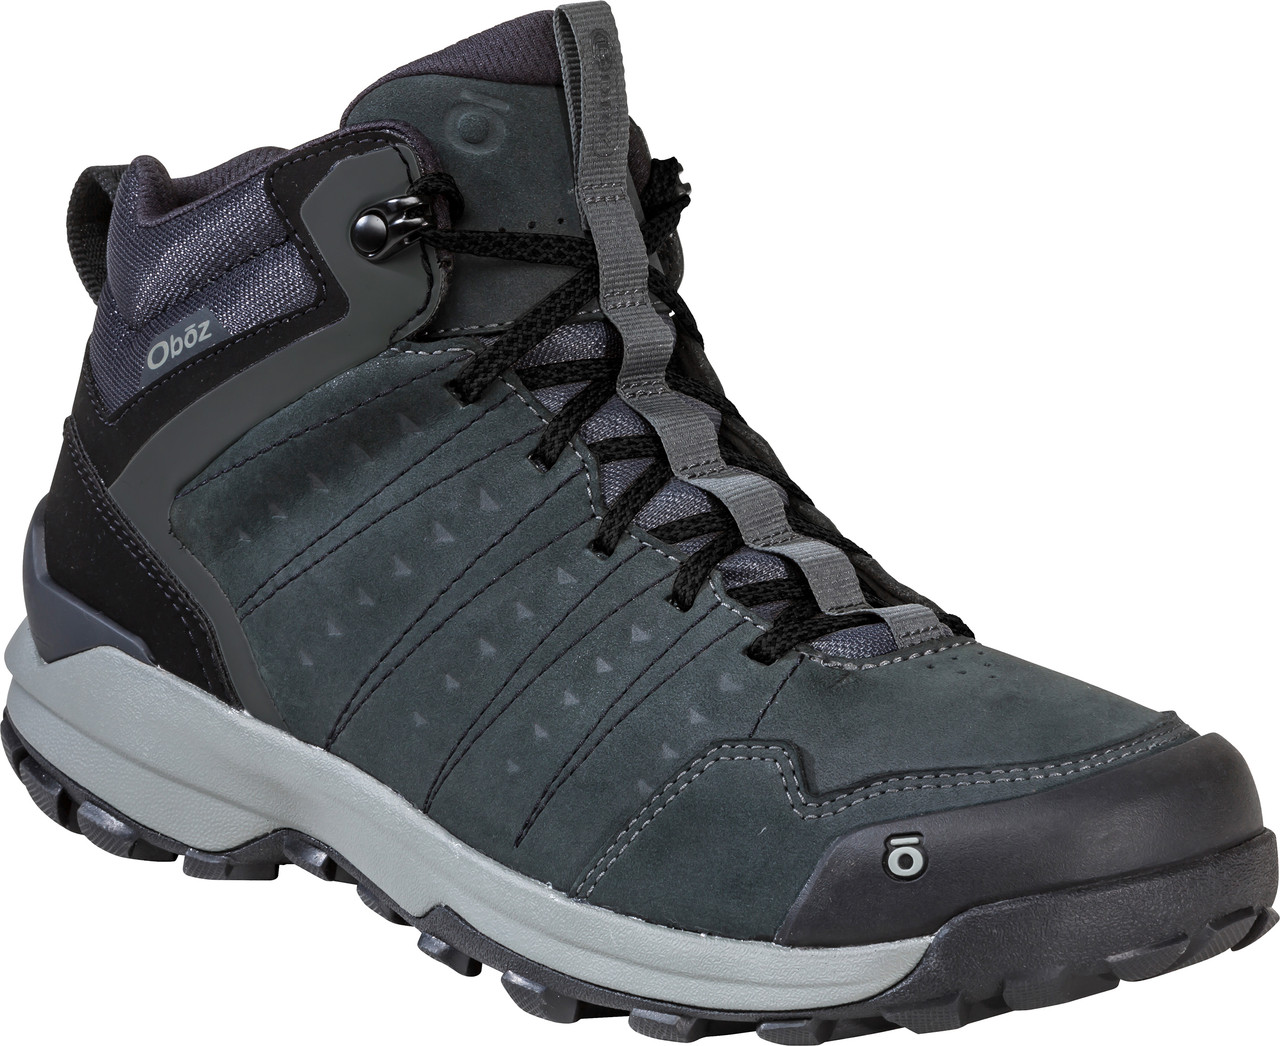 Oboz Sypes Mid Leather B-Dry Hiking Shoes - Men's | MEC